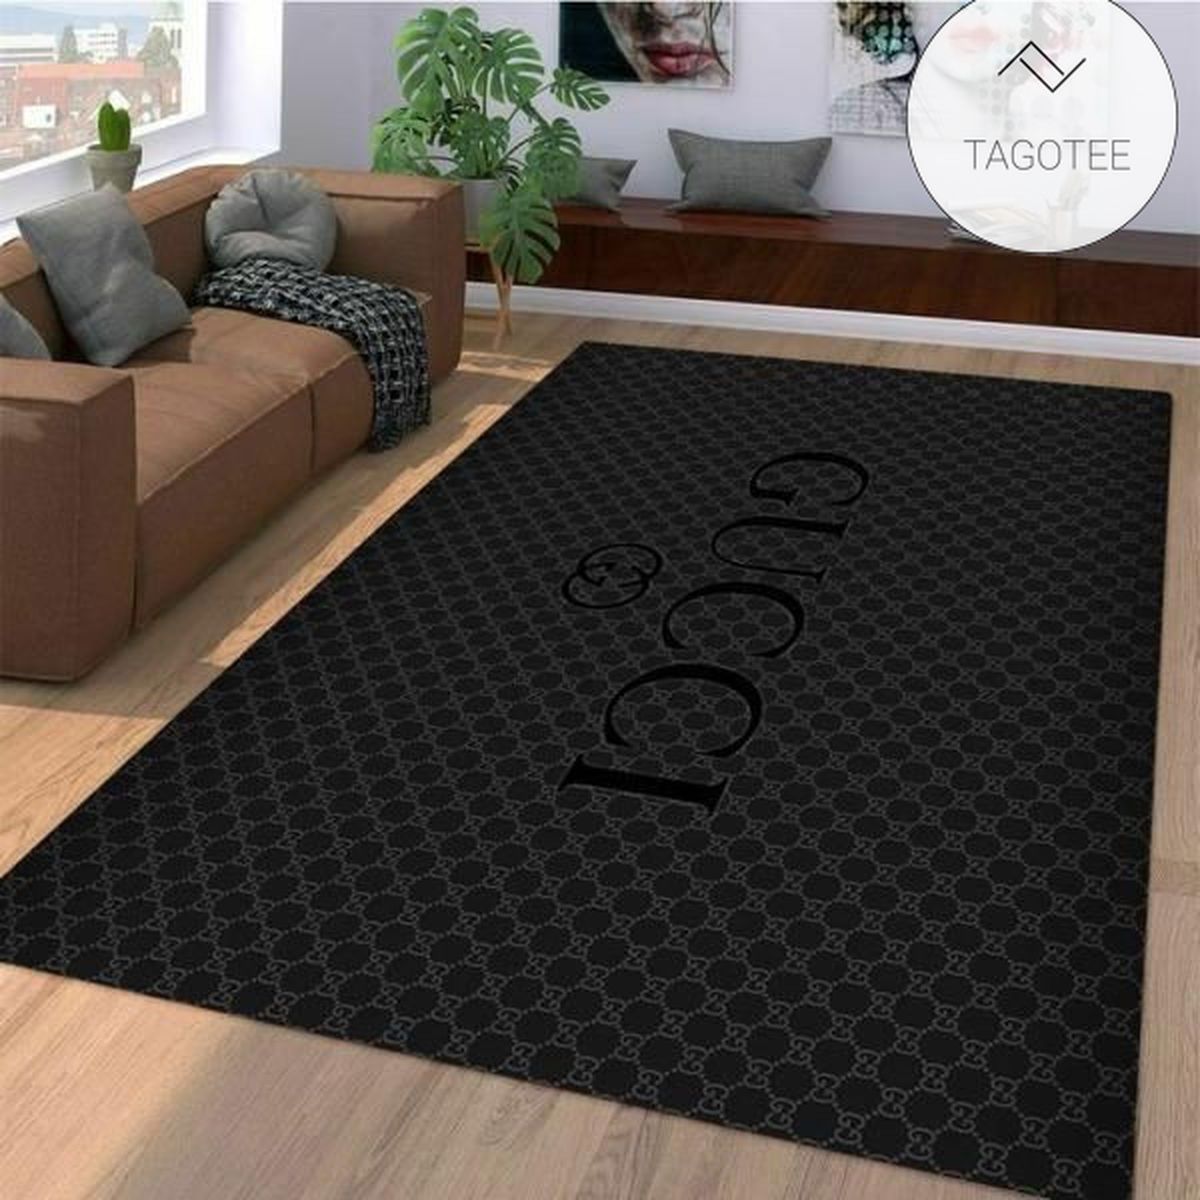 Gucci Inspired Rug Black Hypebeast Carpet